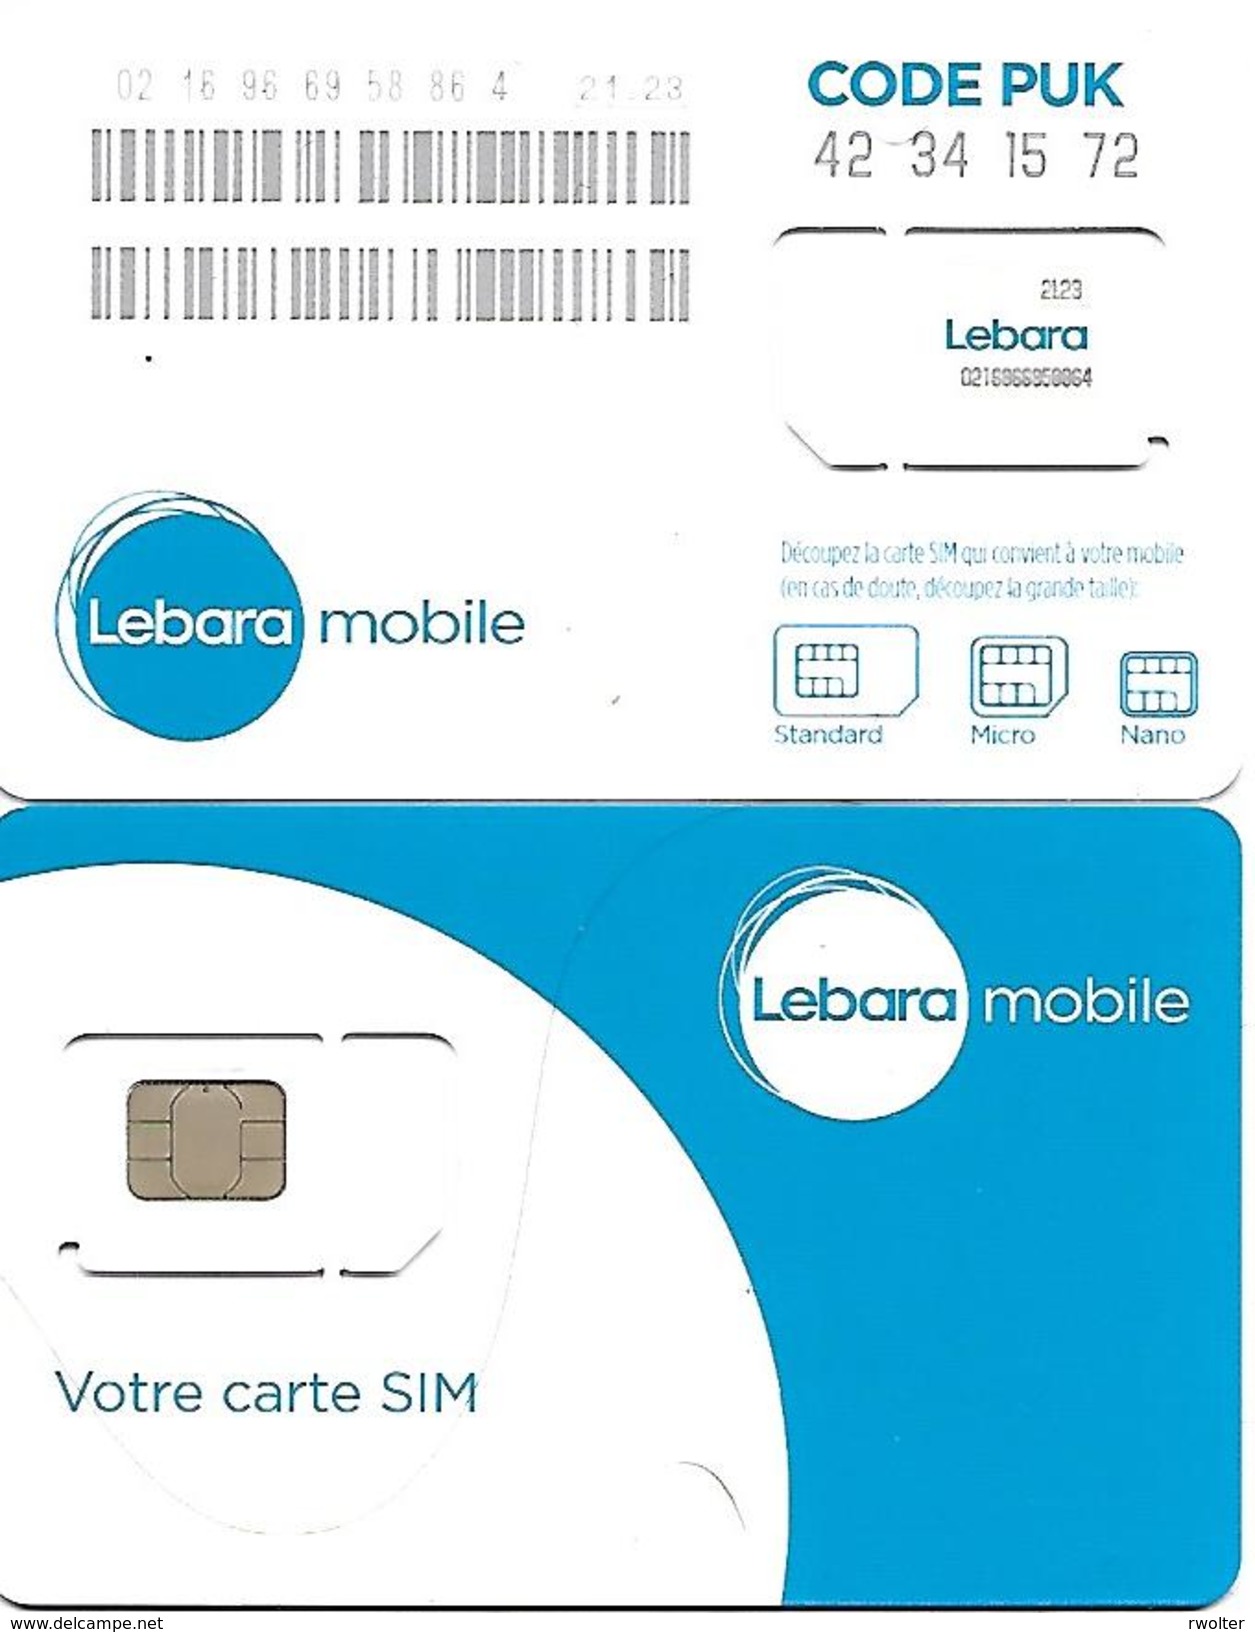 Phonecard: Votre Carte SIM (Mobile France, France(Lebara Mobile - GSM / SIM)  Col:FR-LEB-GSM-0004